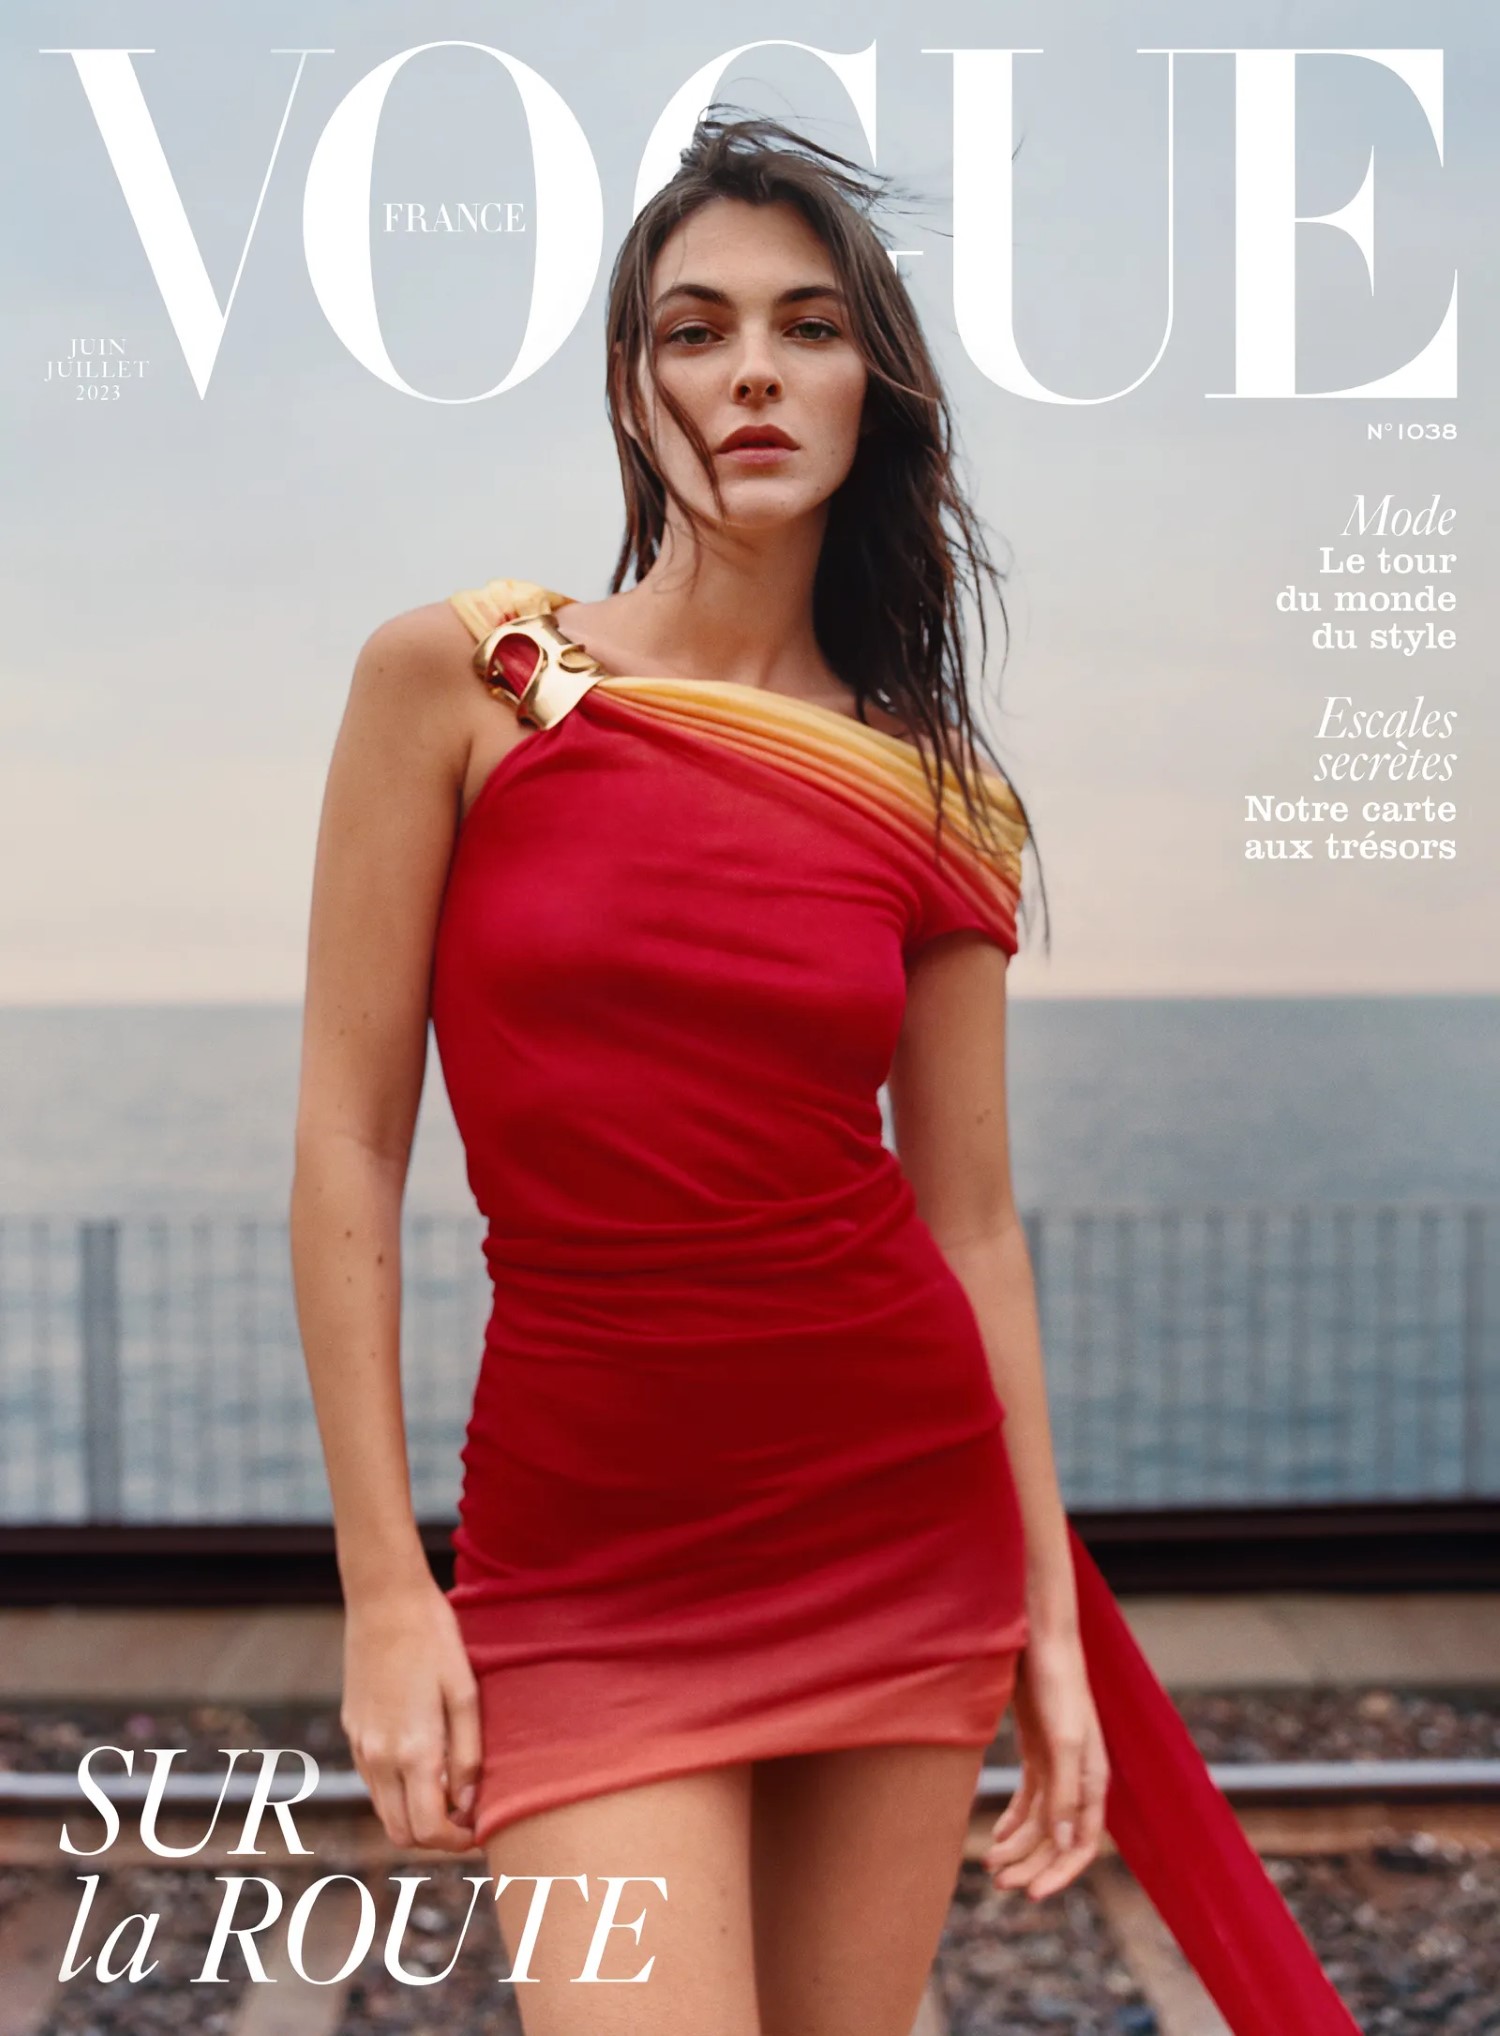 Vogue France's June-July 2022 edition celebrates the Mediterranean